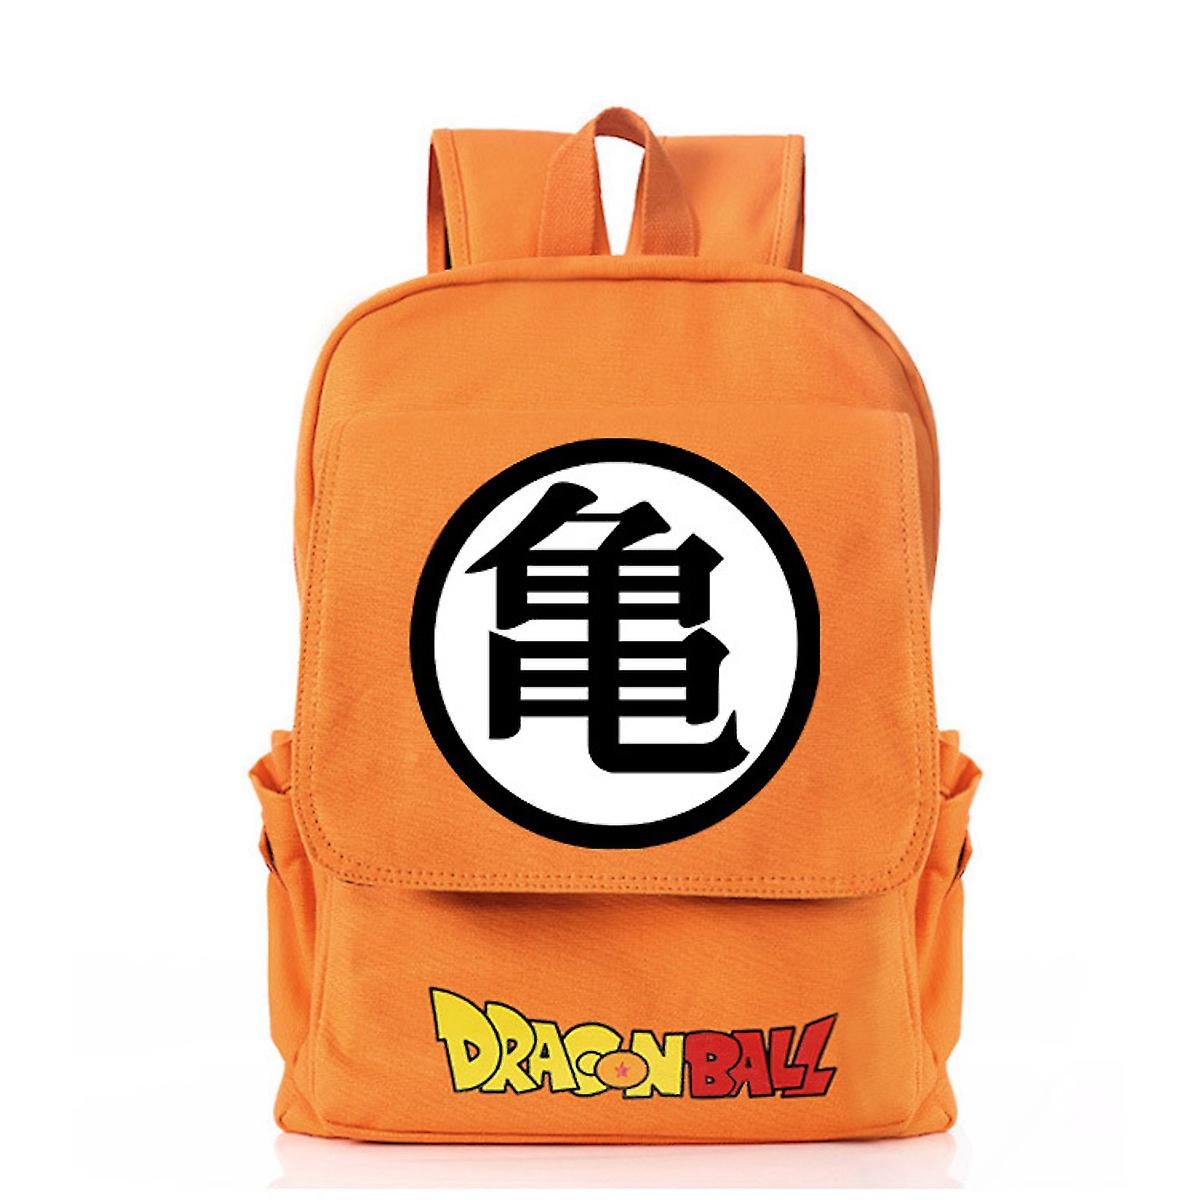 Dragon Ball Z Shoulder Bag Black Canvas Backpack Anime School Bag For Students (Khaki)